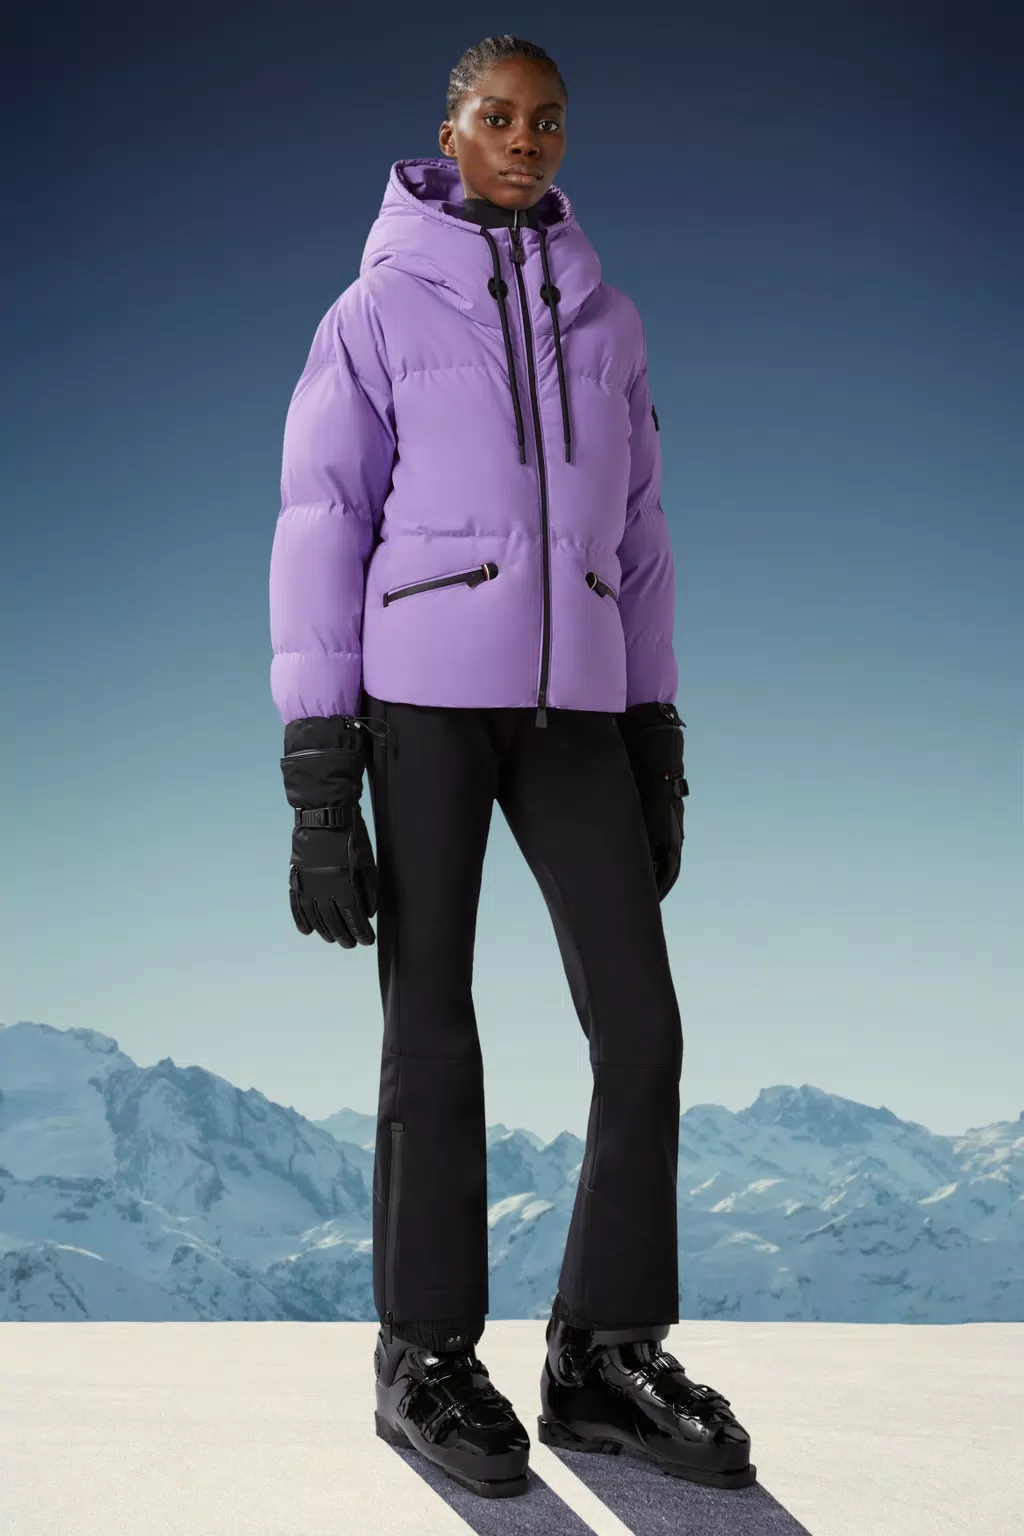 Pantalones Esquí Mujer